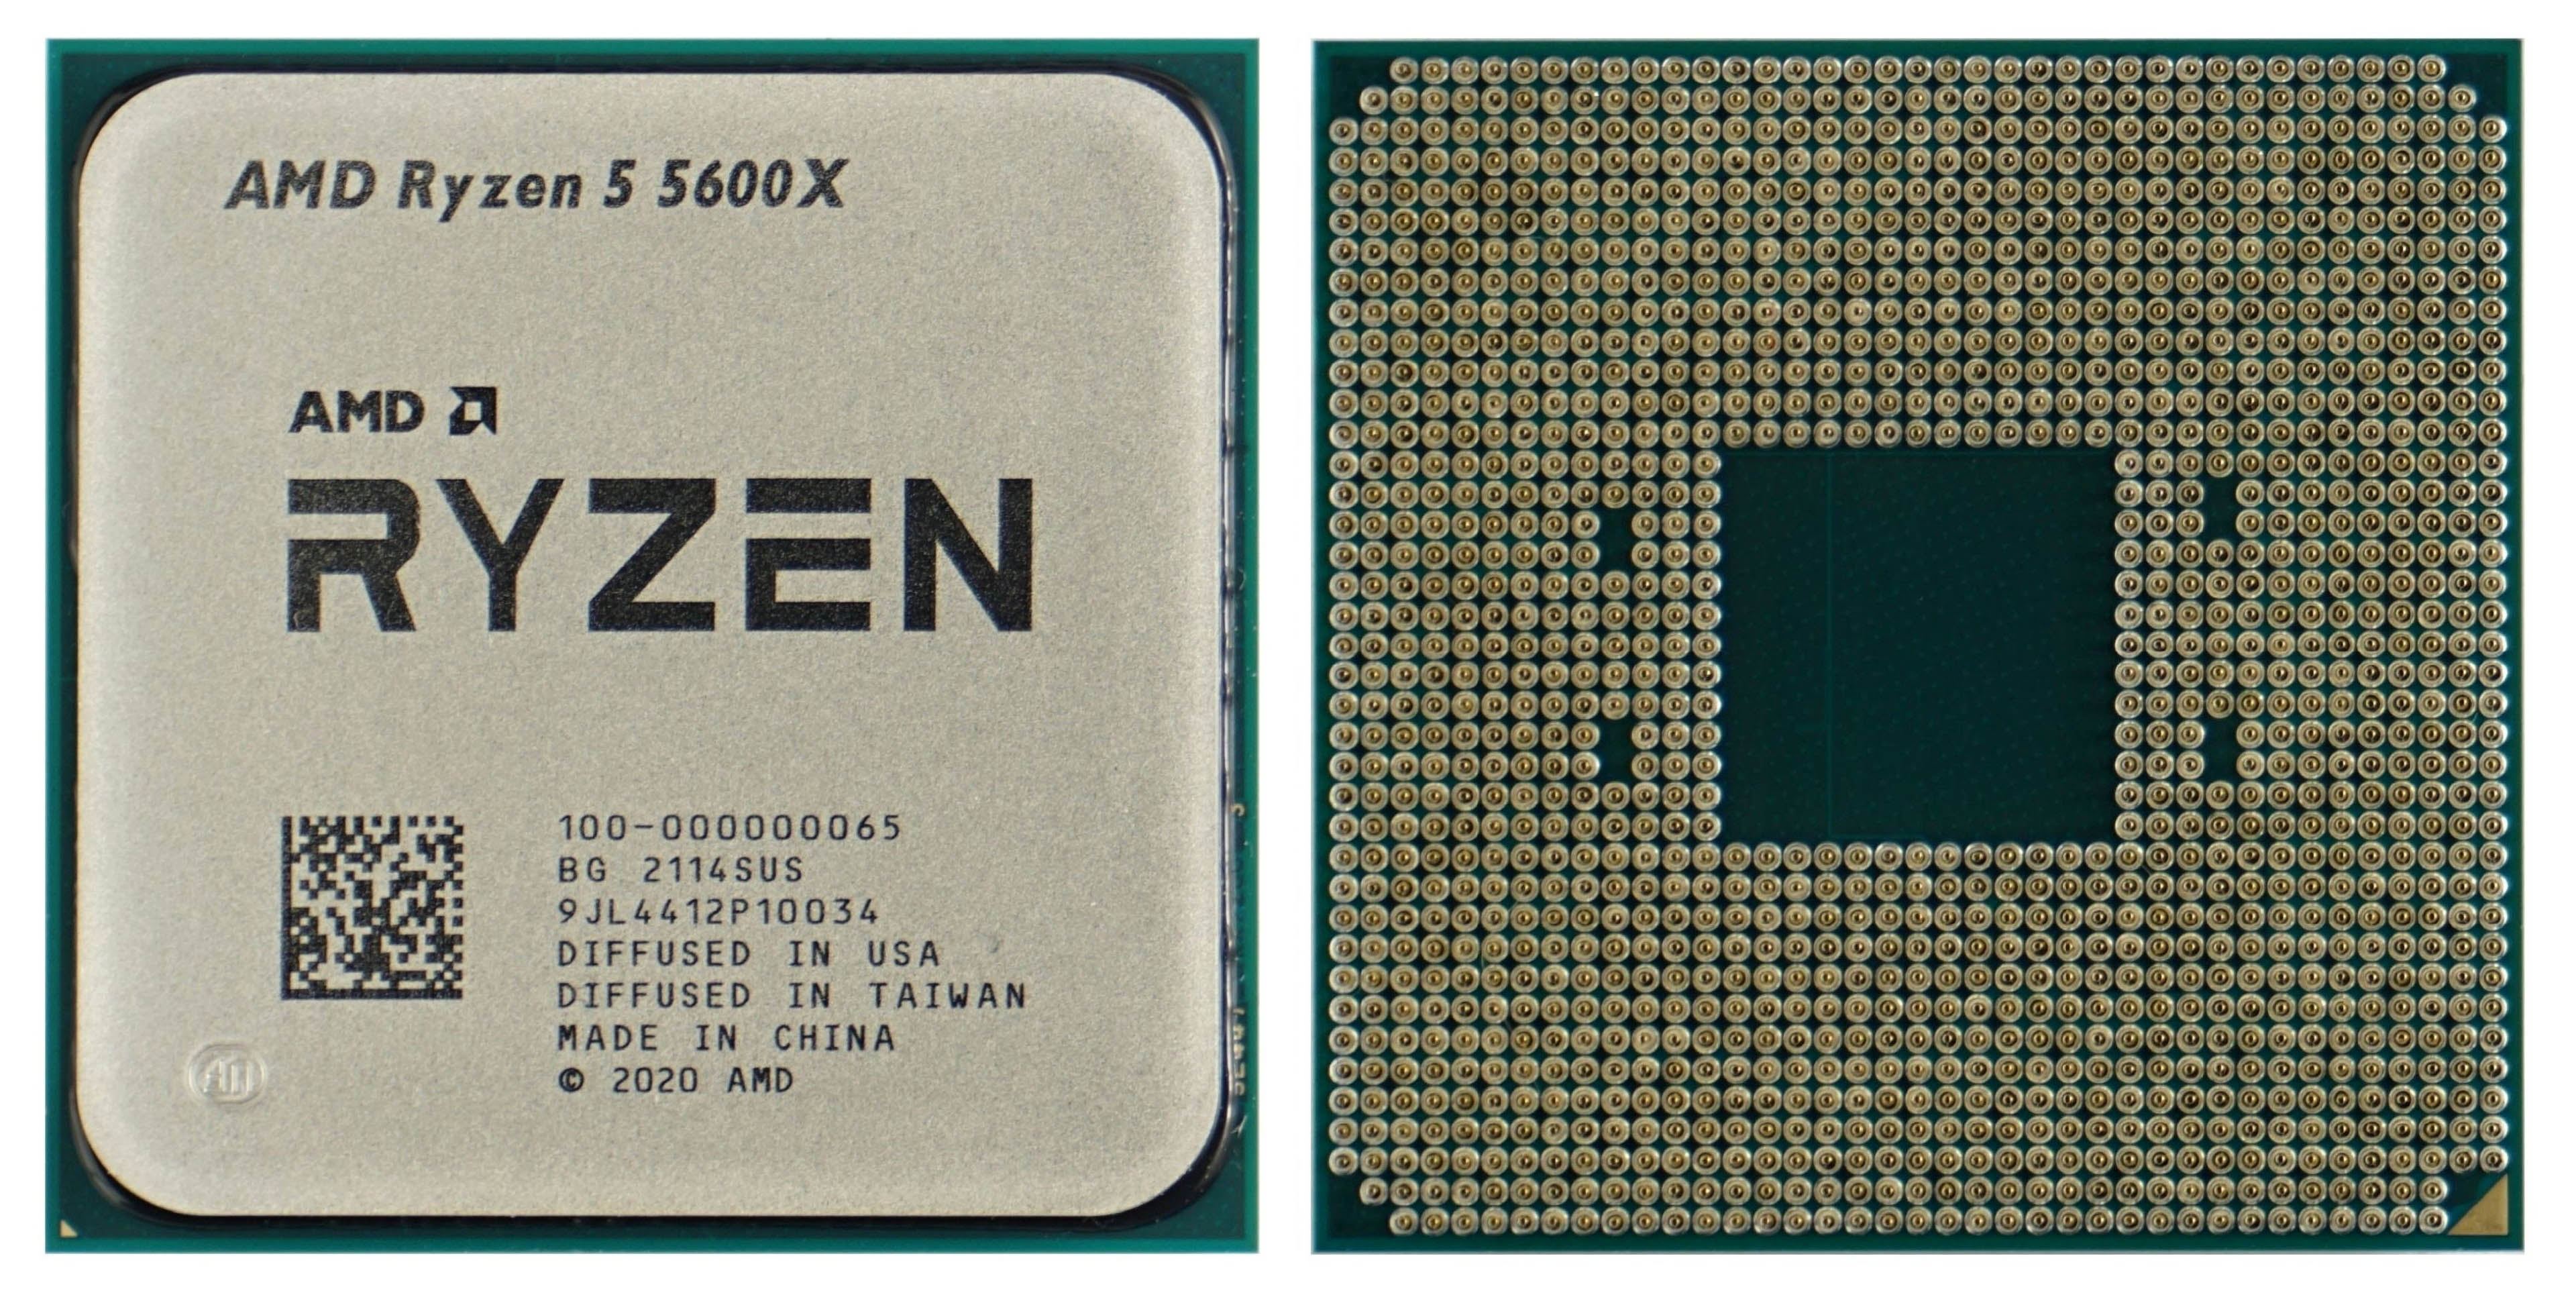 AMD Ryzen 5 5600X: Worth €120 more than the Core i5? 